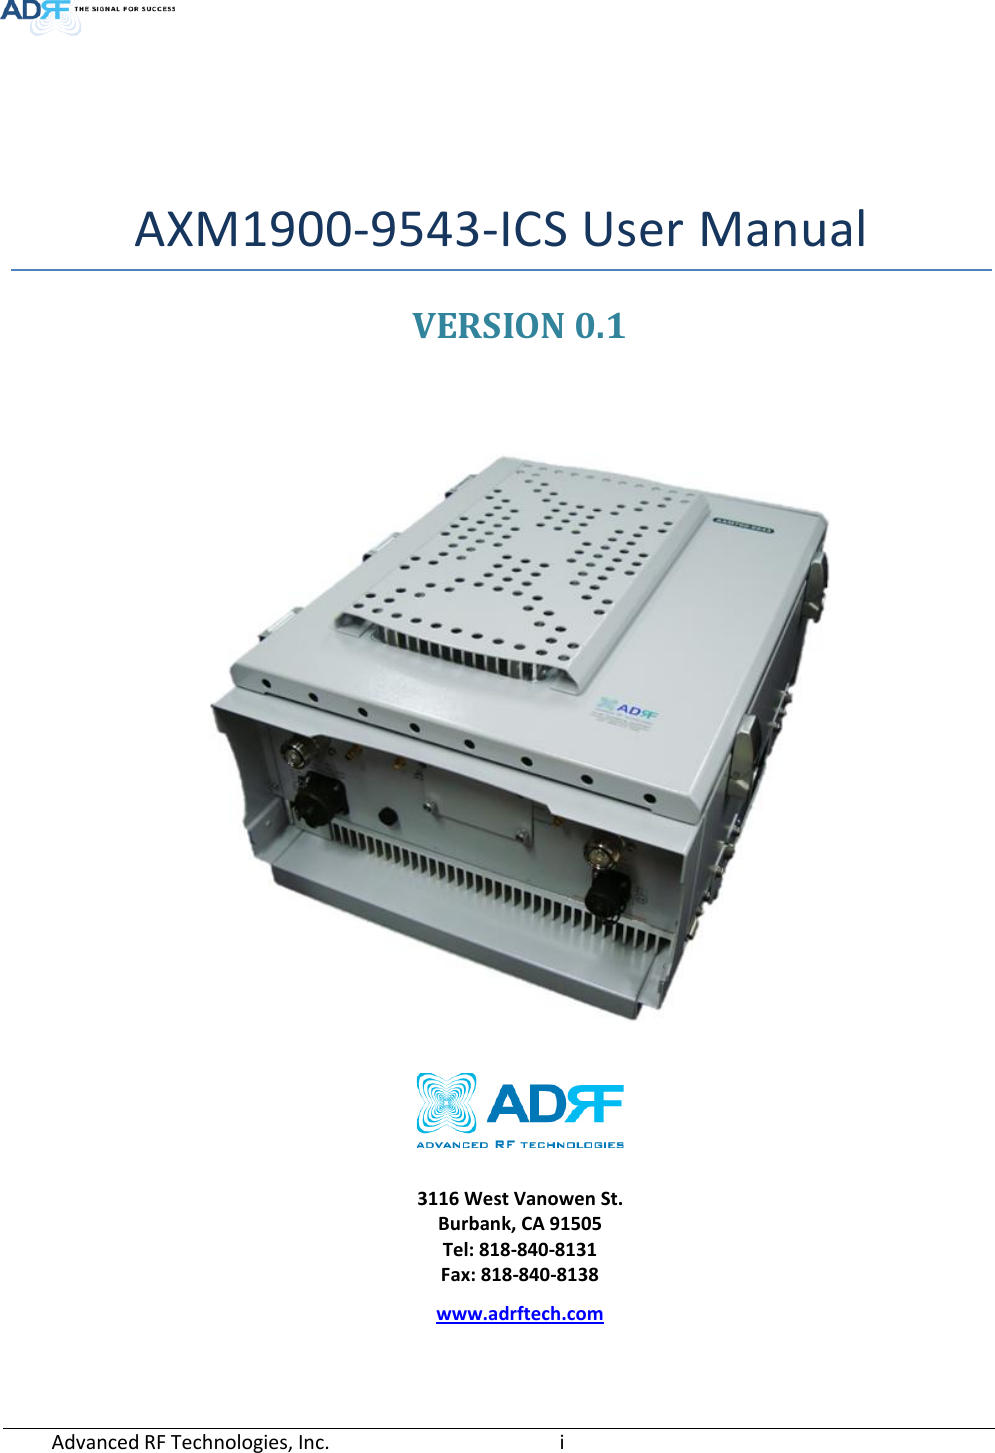   AXM1900-9543-ICS User Manual VERSION 0.1        3116 West Vanowen St. Burbank, CA 91505 Tel: 818-840-8131 Fax: 818-840-8138 www.adrftech.com   Advanced RF Technologies, Inc.        i    